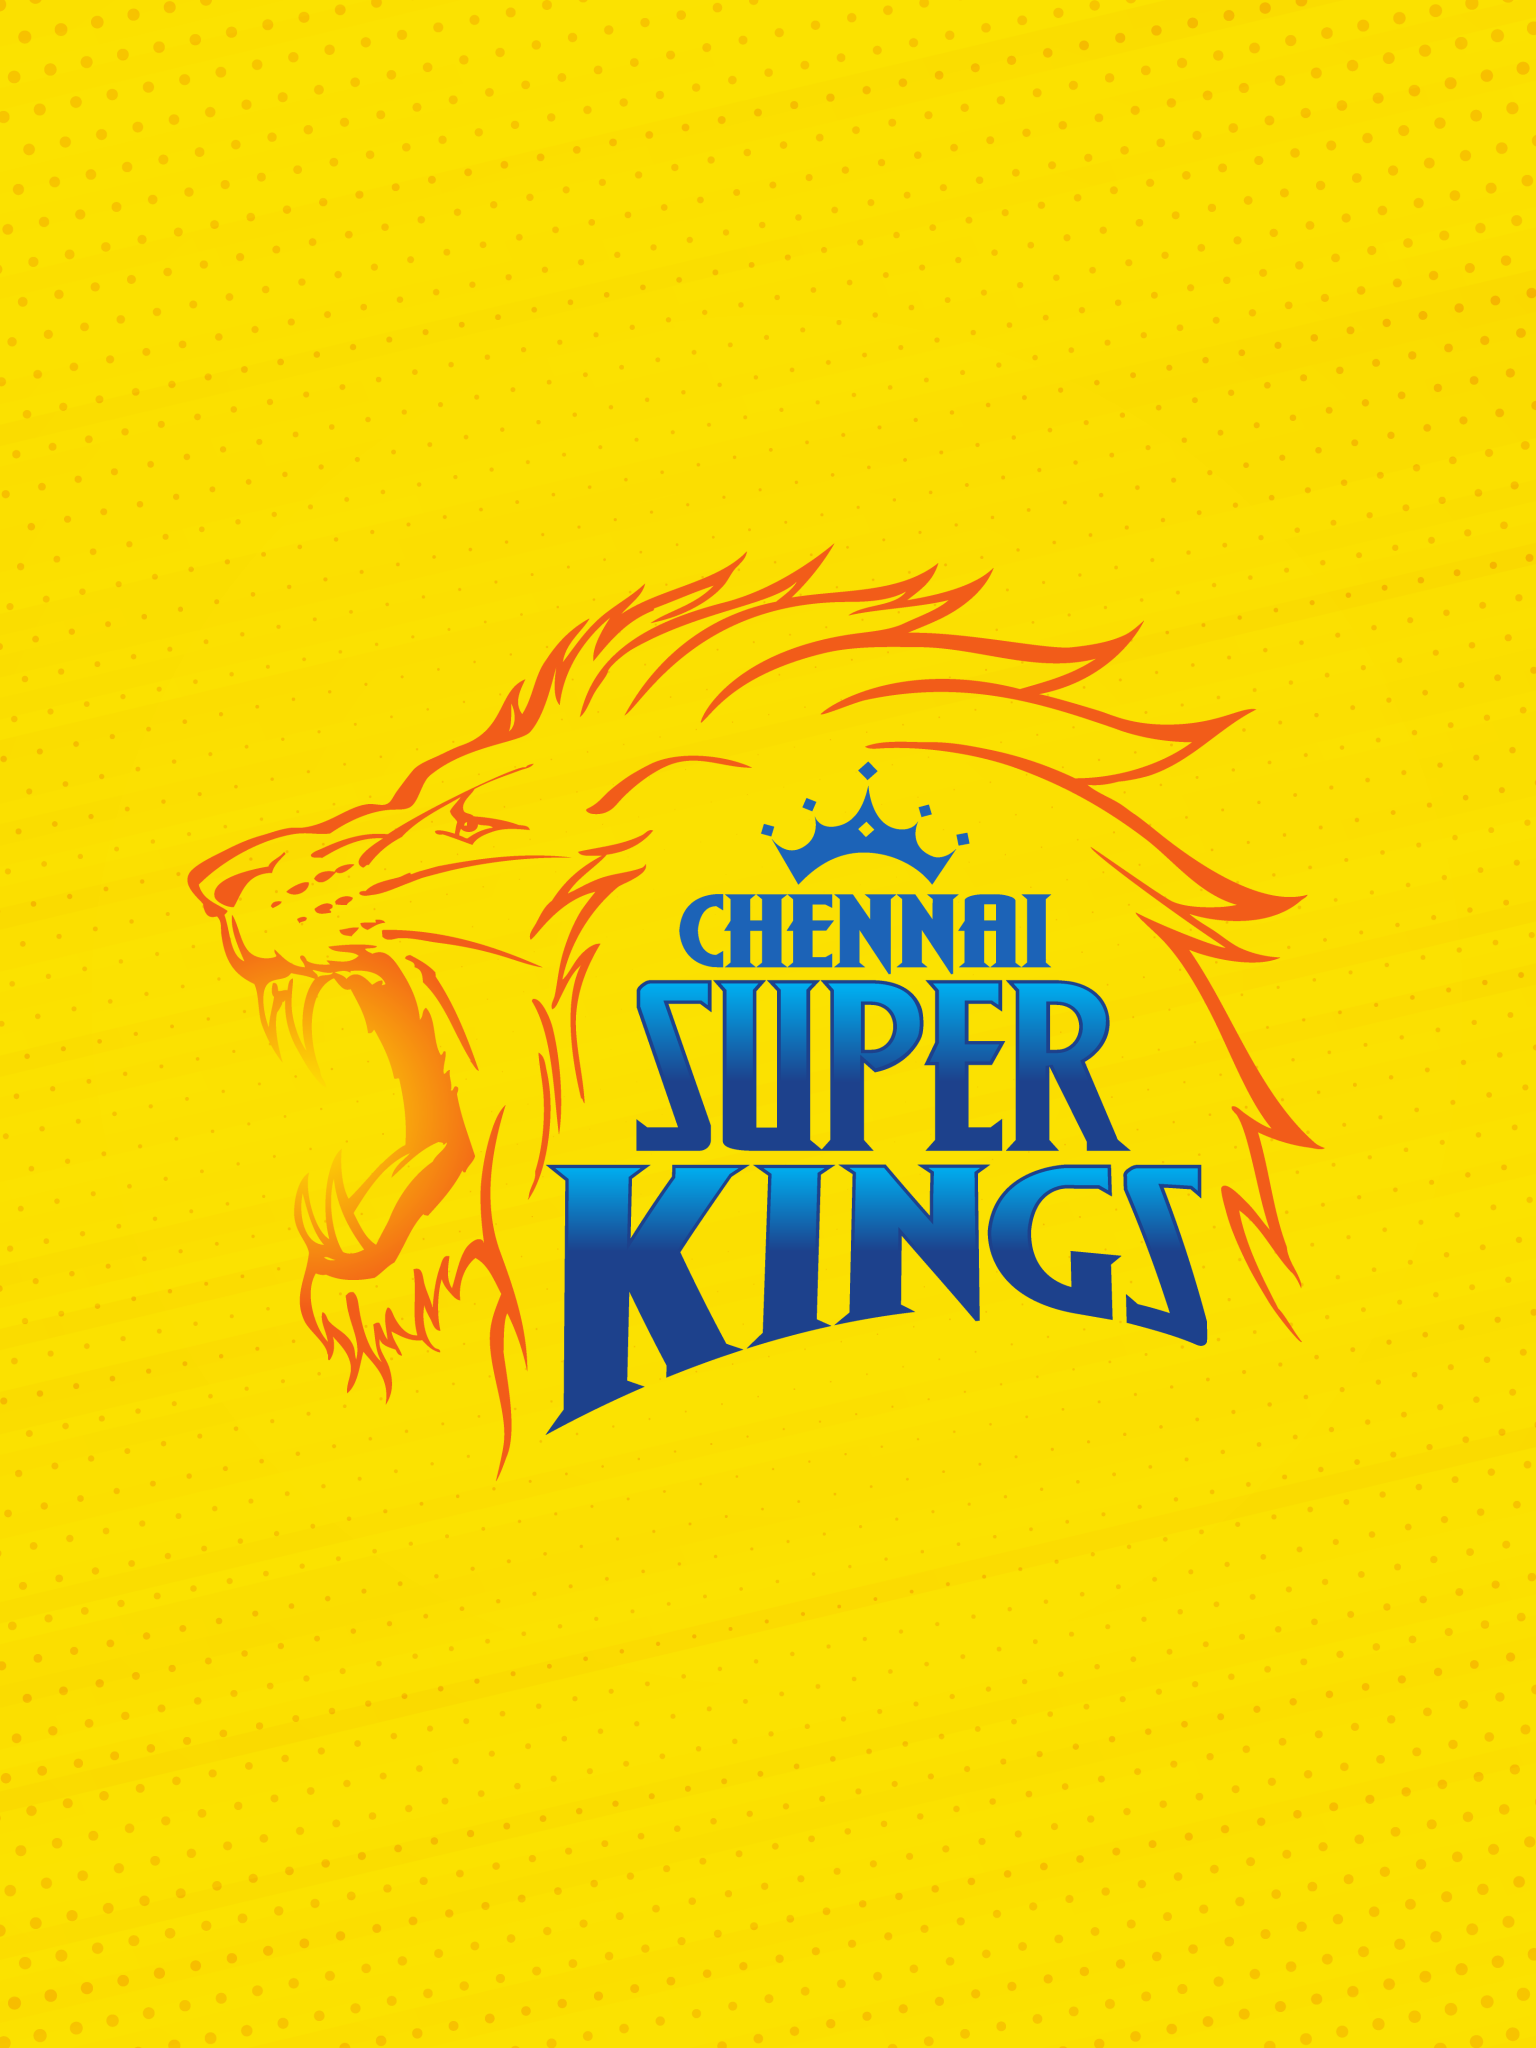 Chennai Super Kings 4K Wallpaper, Indian Premier League, IPL, IPL Cricket, 5K, 8K, Sports